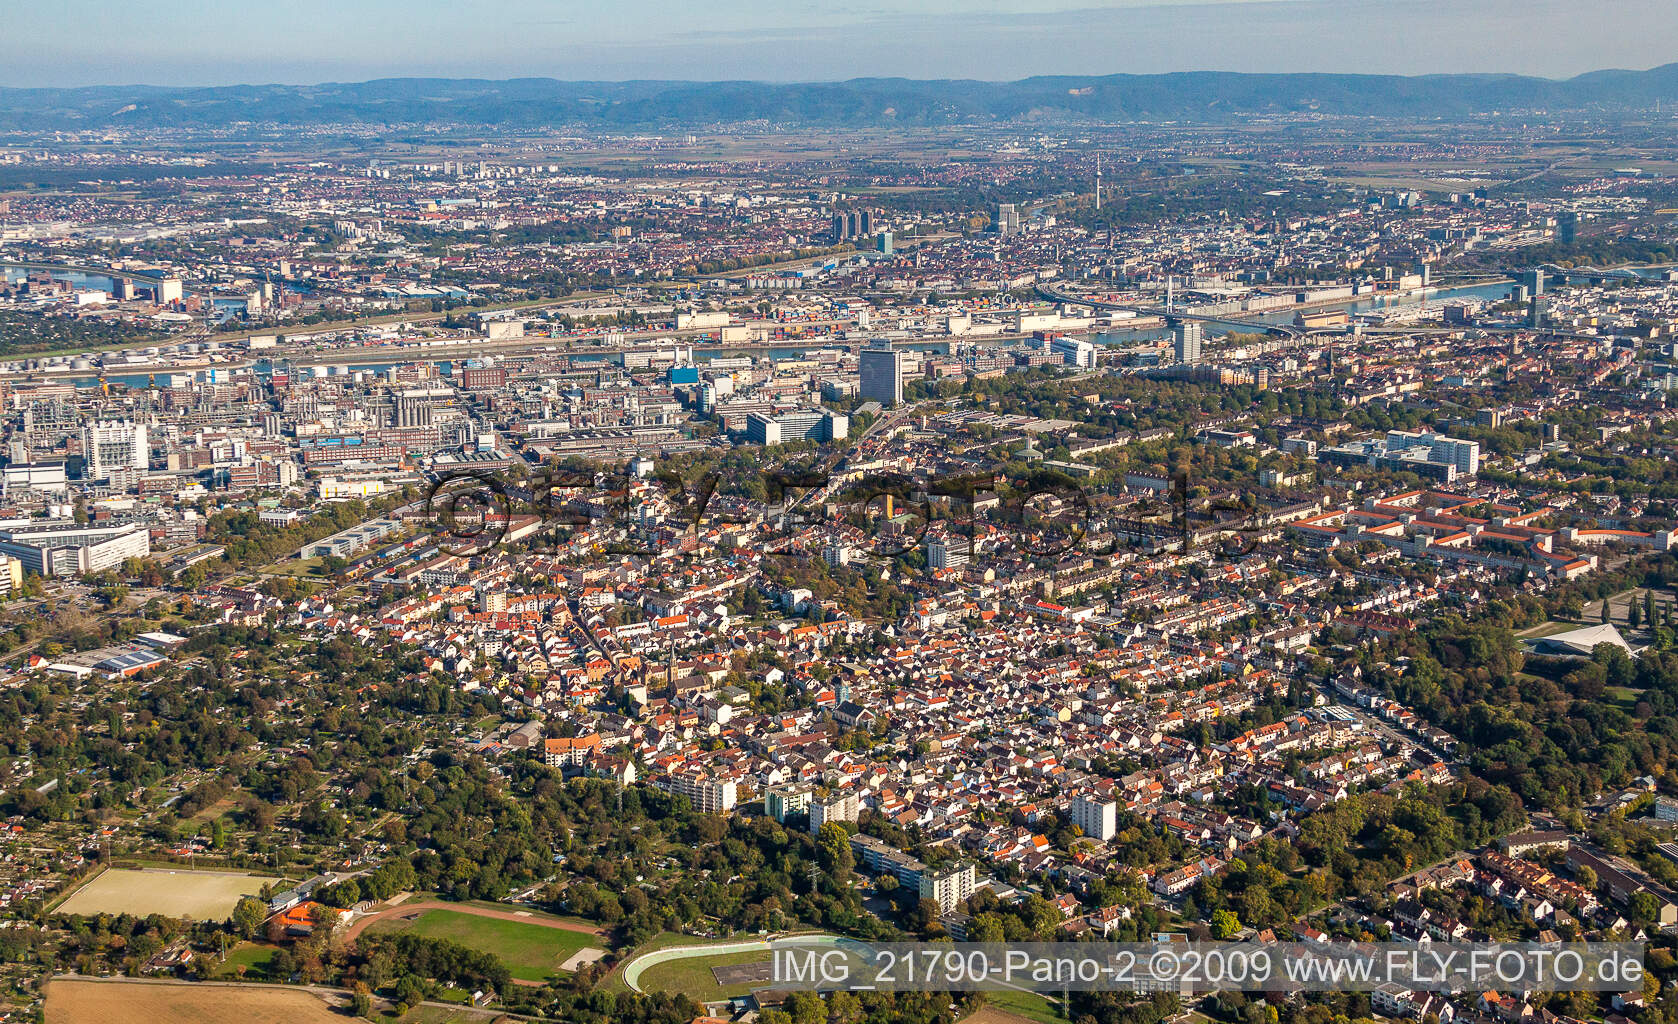 Aerial view of District Friesenheim in Ludwigshafen am Rhein in the state Rhineland-Palatinate, Germany